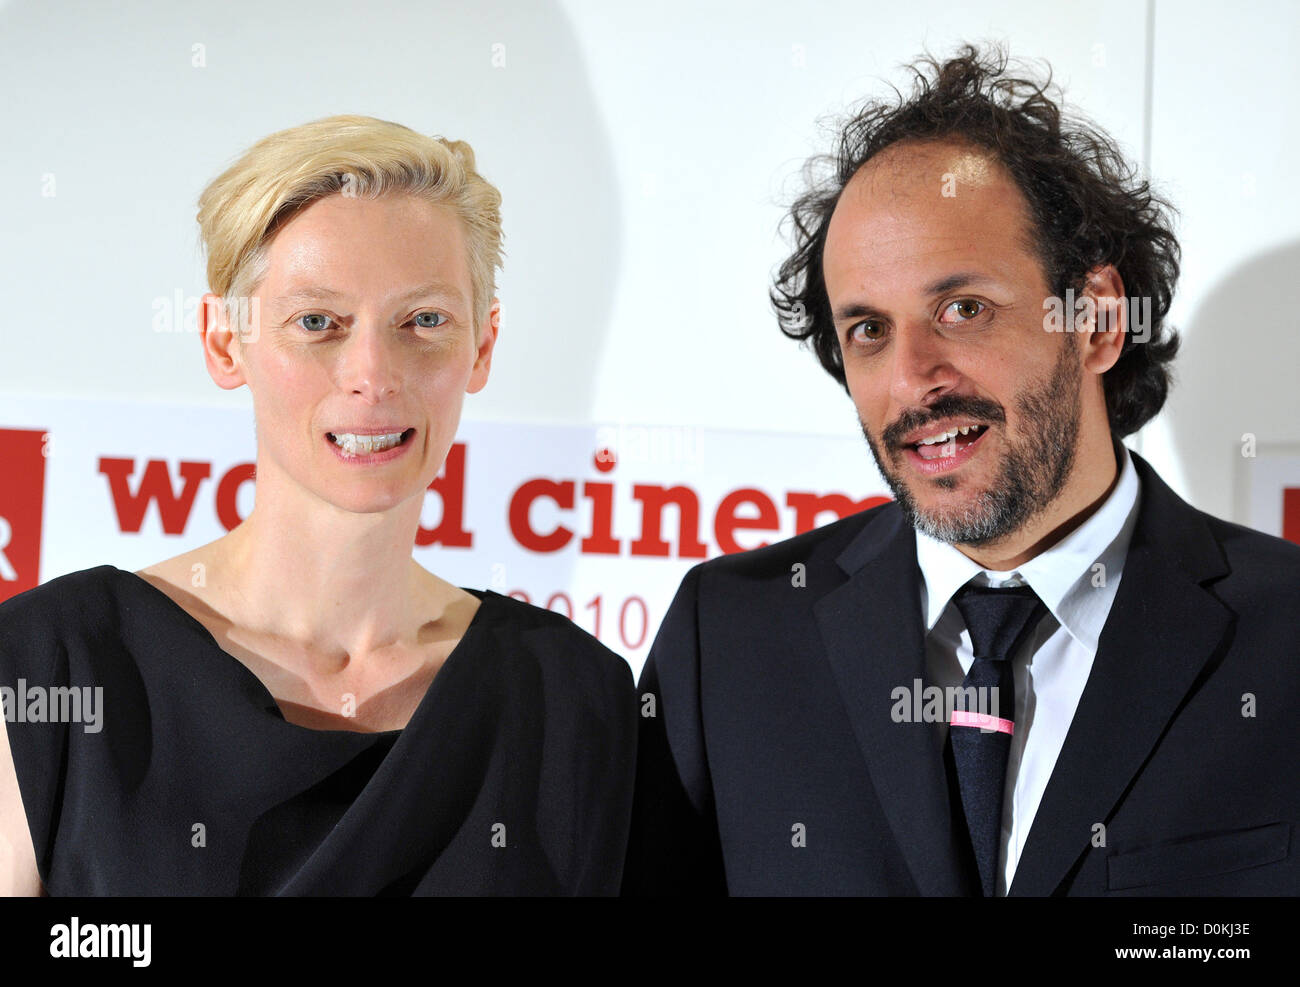 Tilda Swinton and Luca Guadagnino BBC Four World Cinema Award held at the BFI Southbank. London, England - 07.10.10 Stock Photo